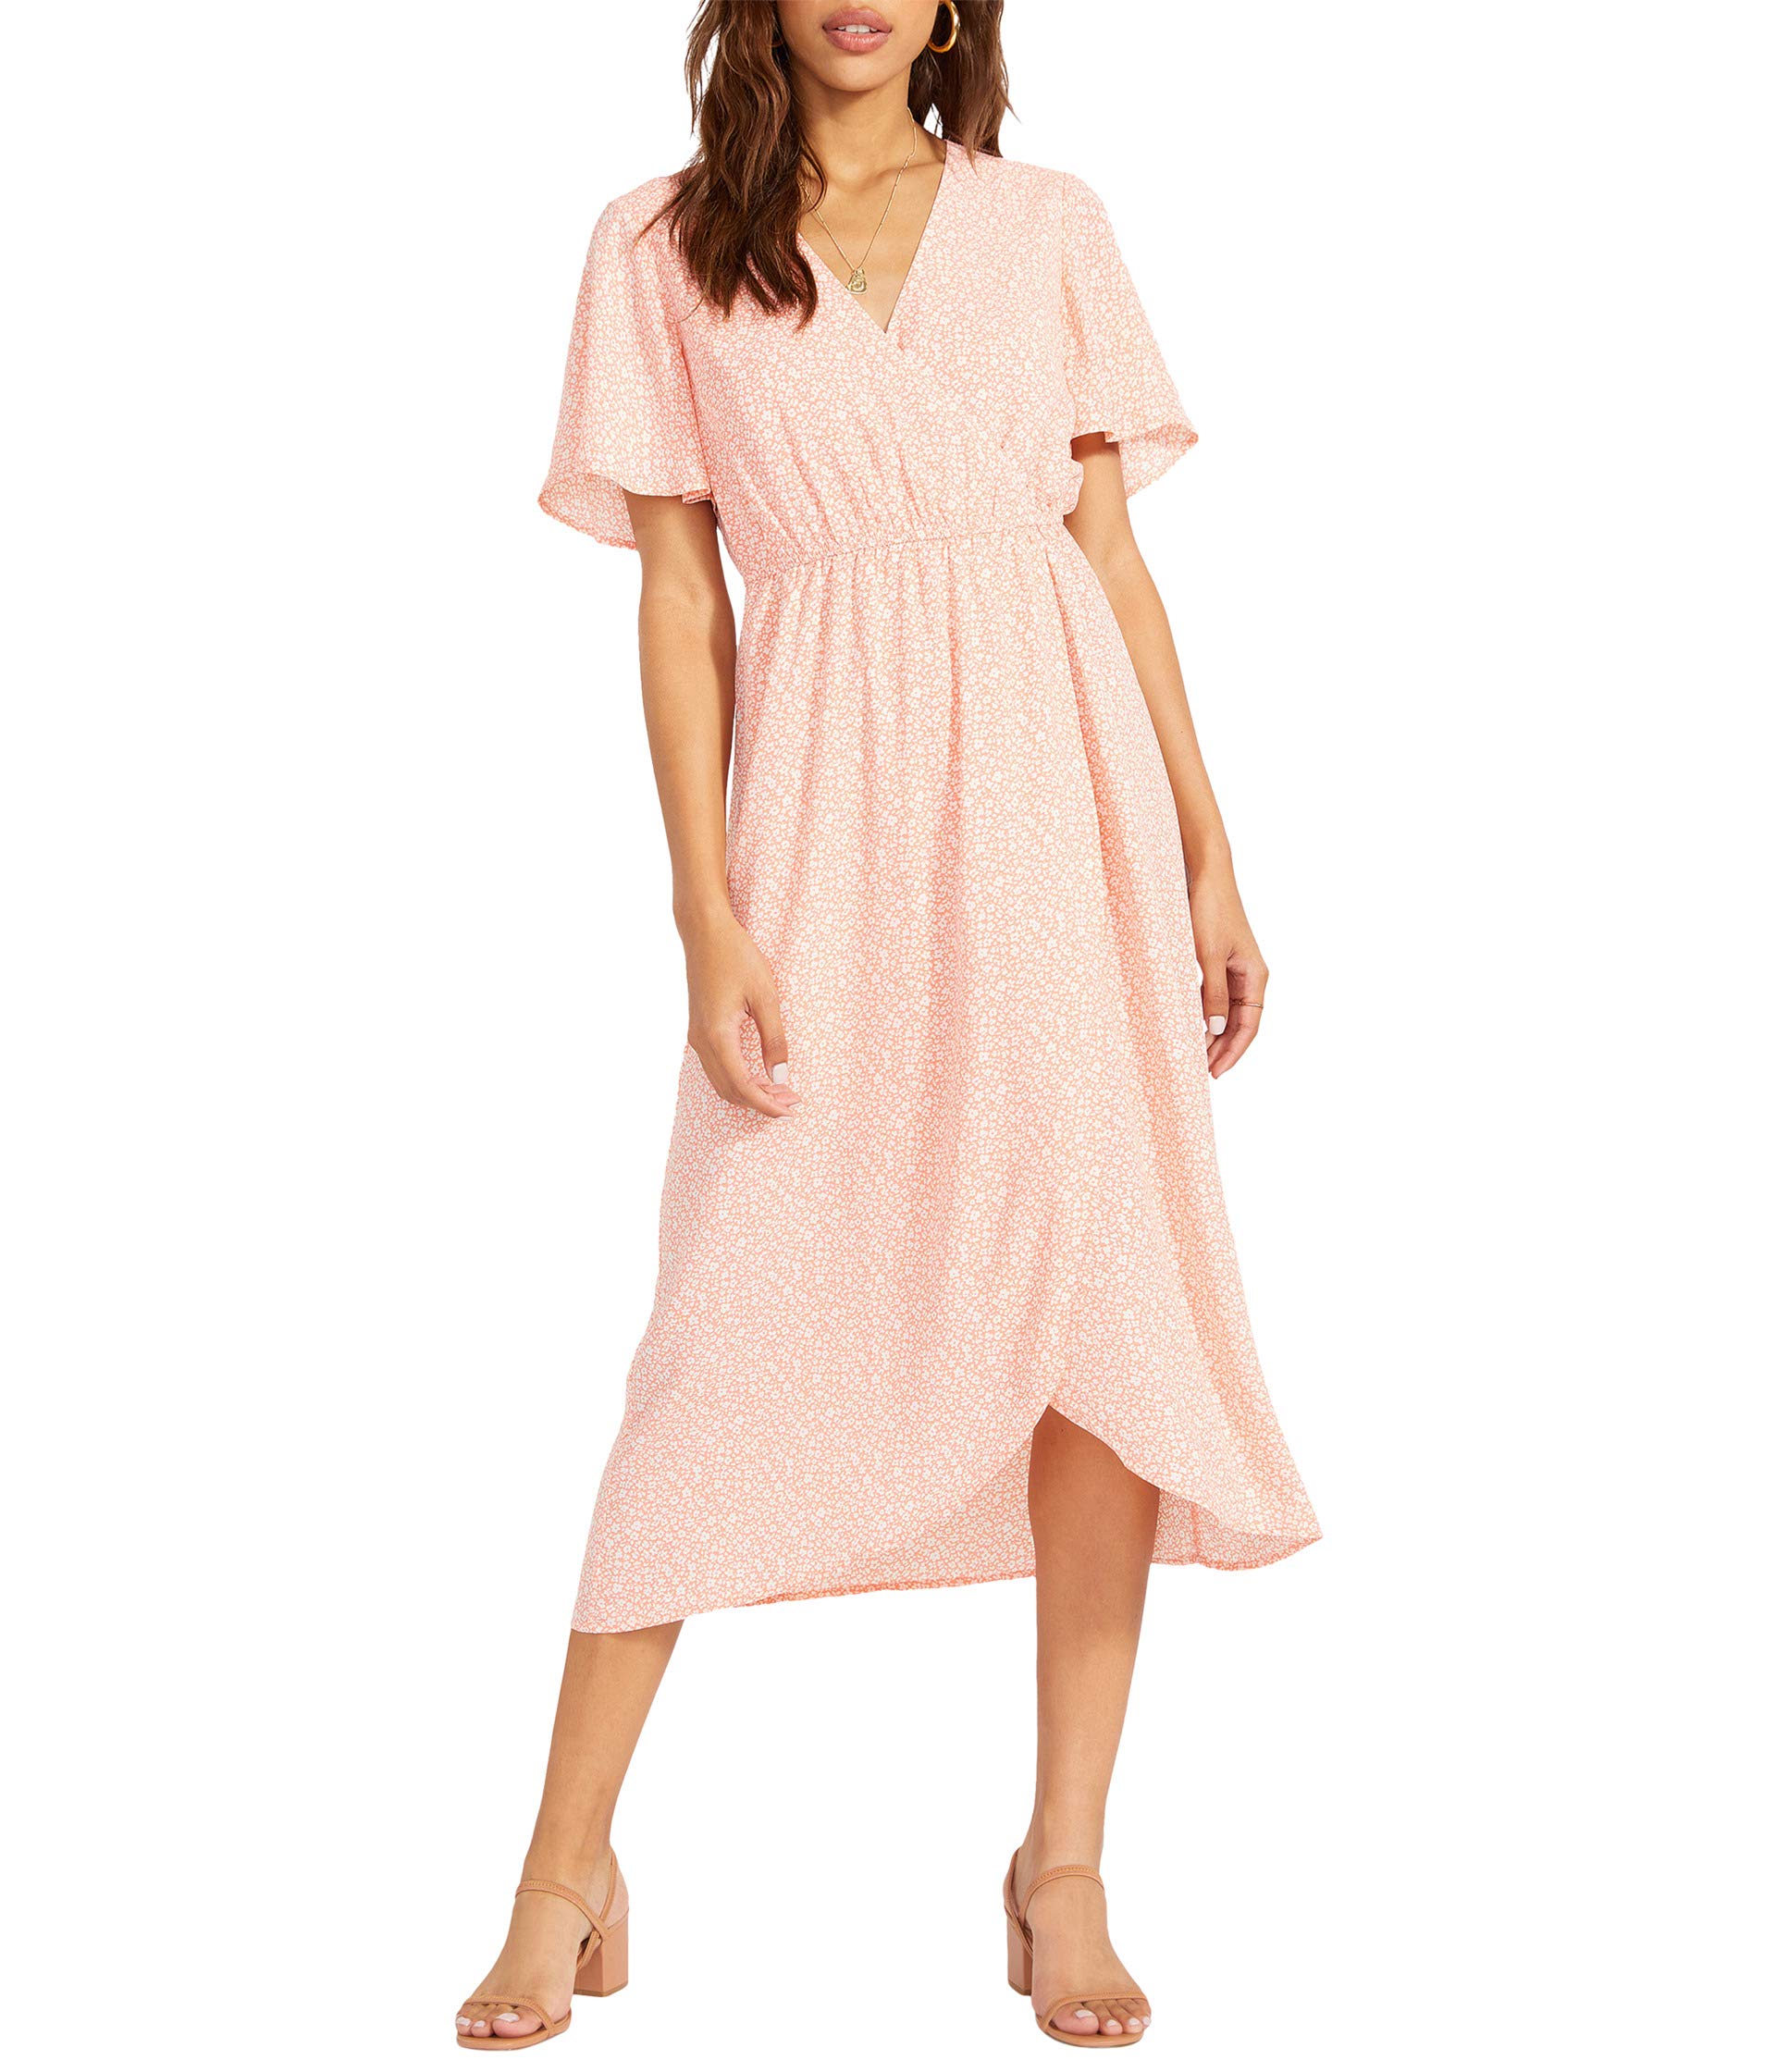 Платье Steve Madden, Past Life Dress - Floral Printed Wrap Dress цена и фото